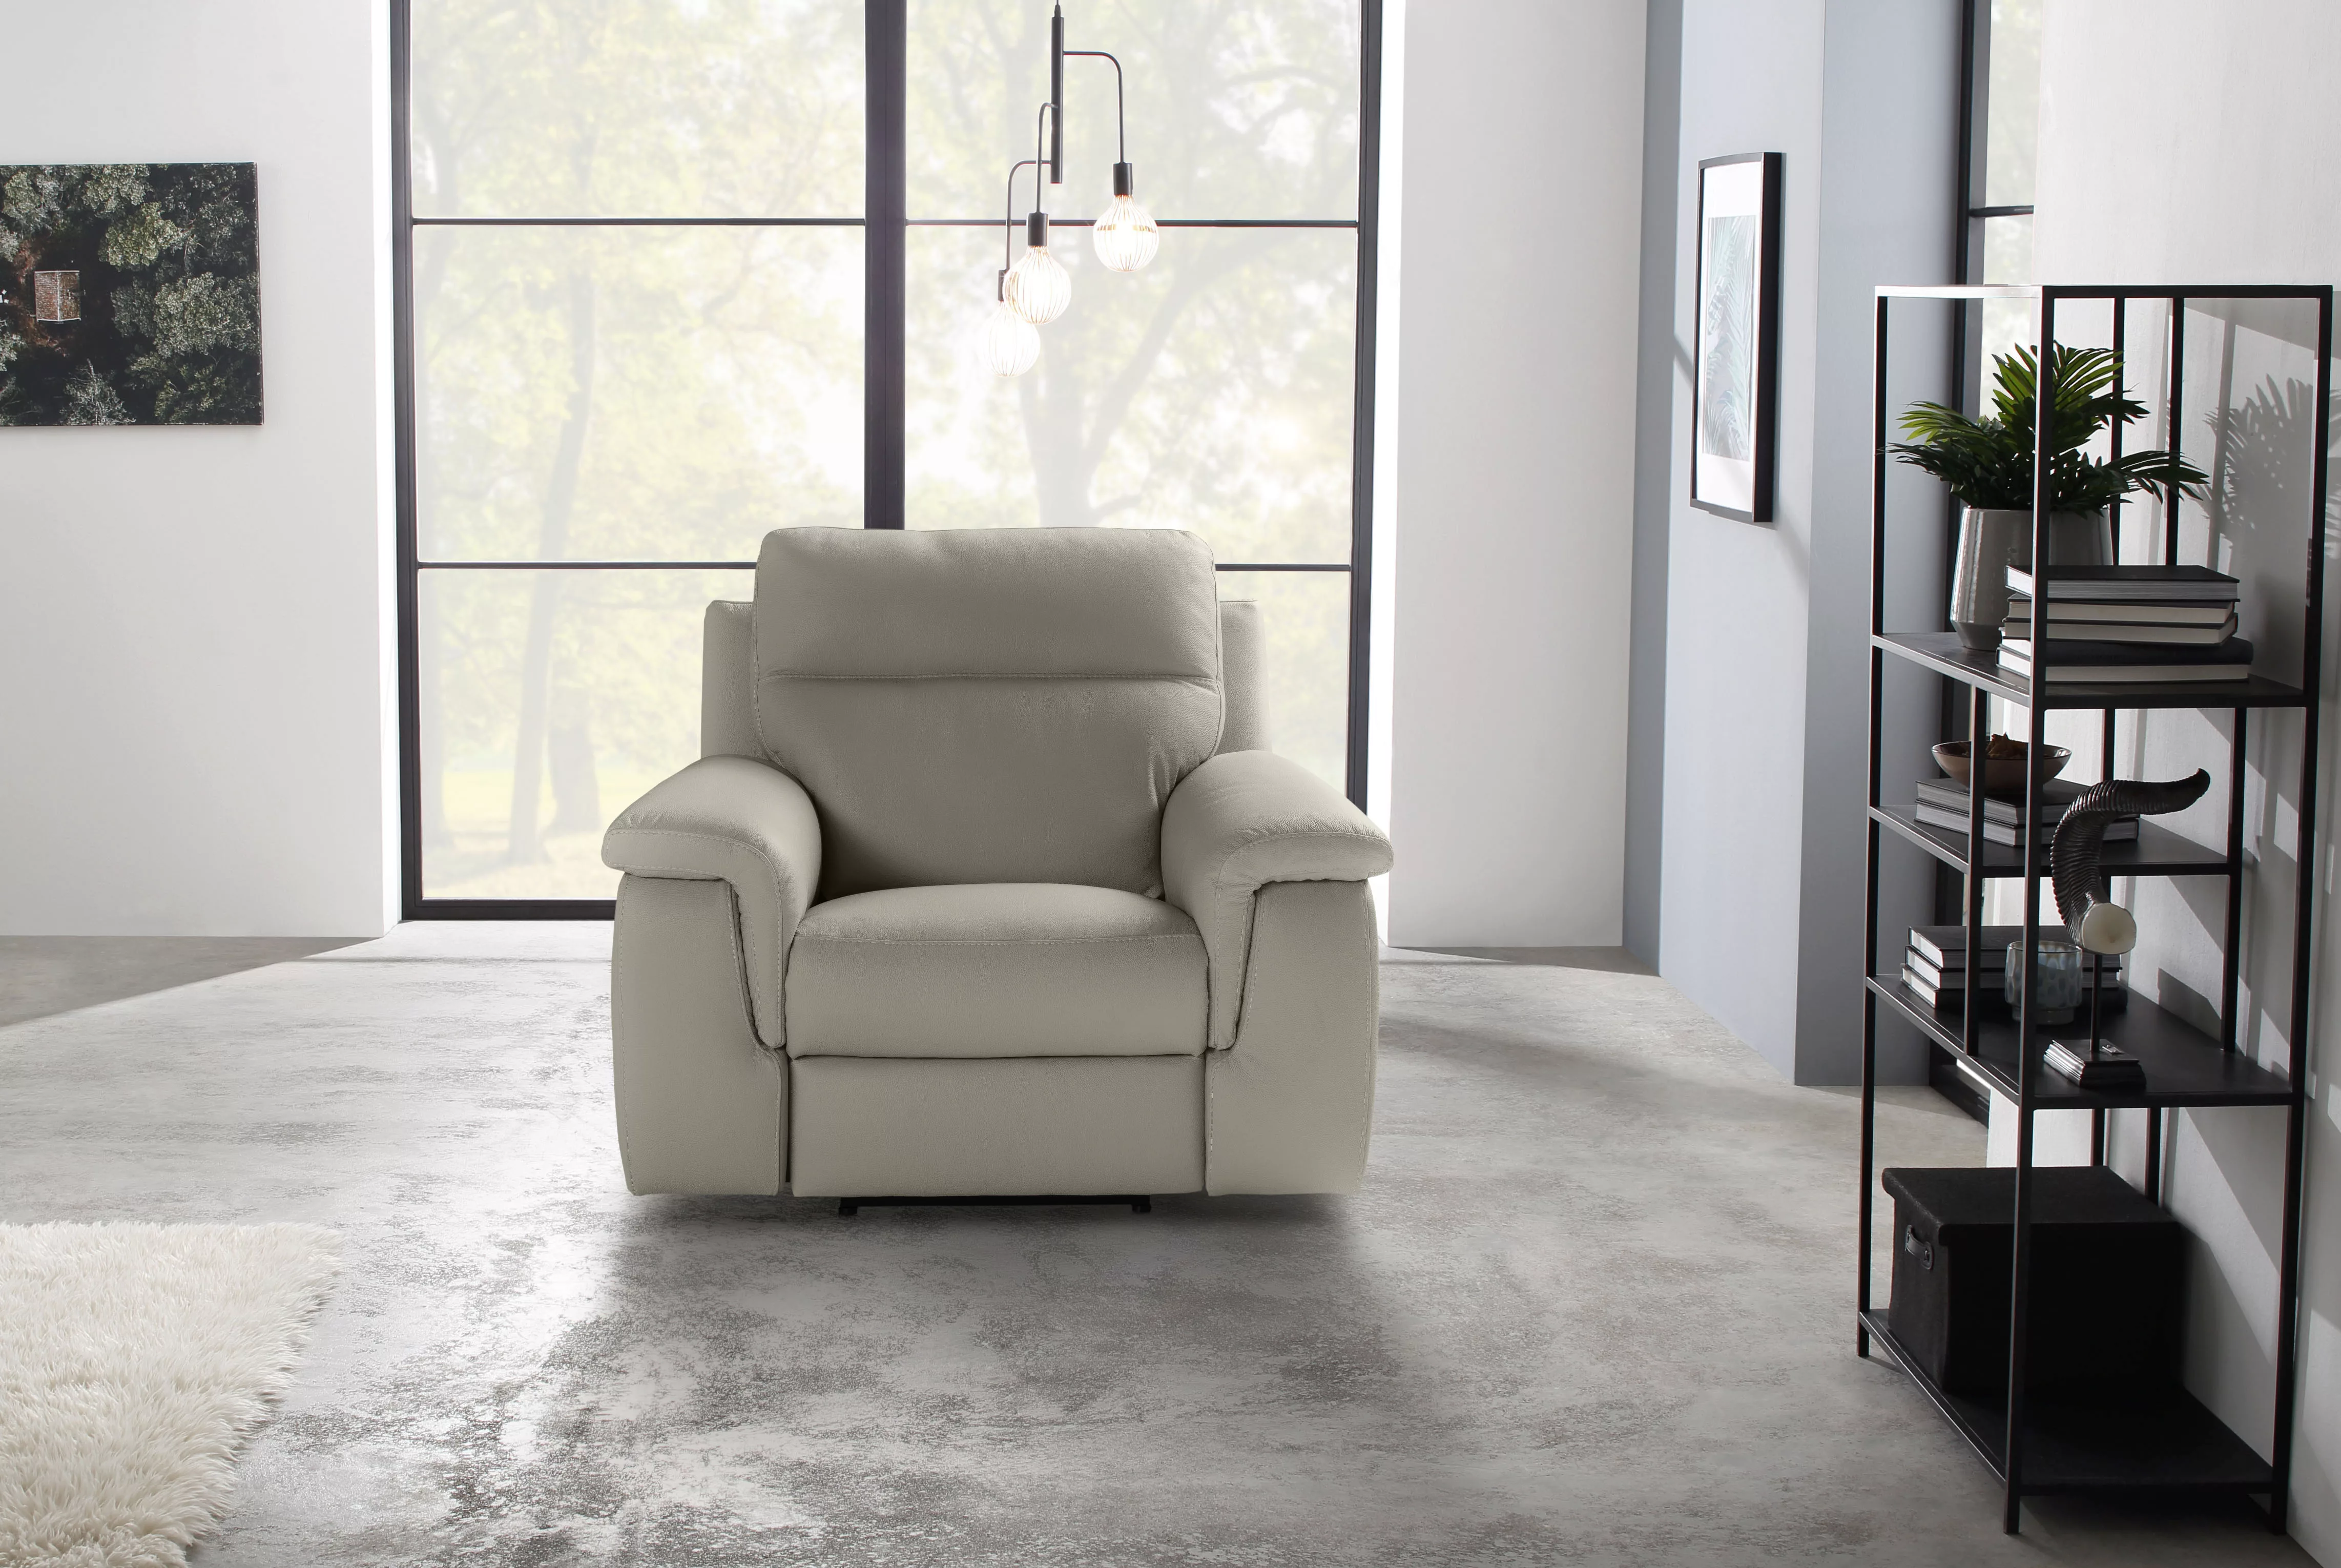 Nicoletti Home Sessel "Alan", inklusive Fußstütze, wahlweise mit Relaxfunkt günstig online kaufen